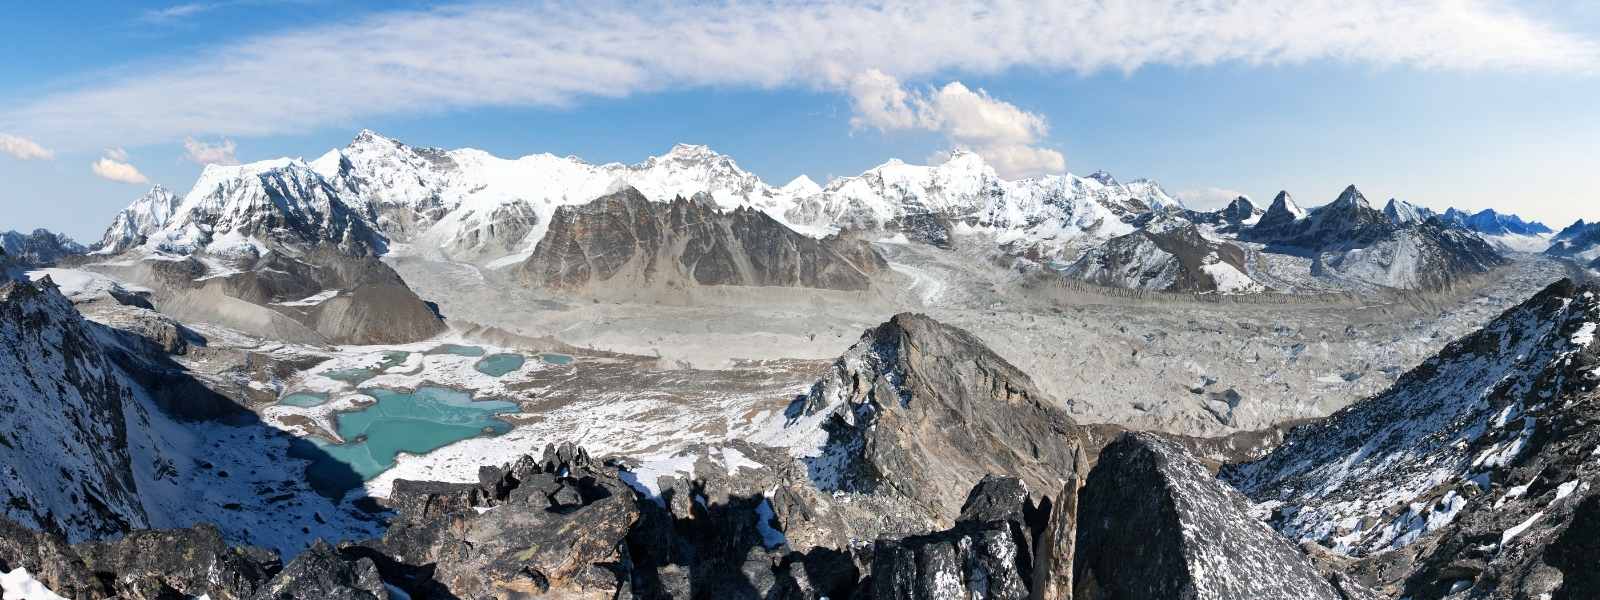 Melting Glaciers - Mount Cho Oyu, Himalayas